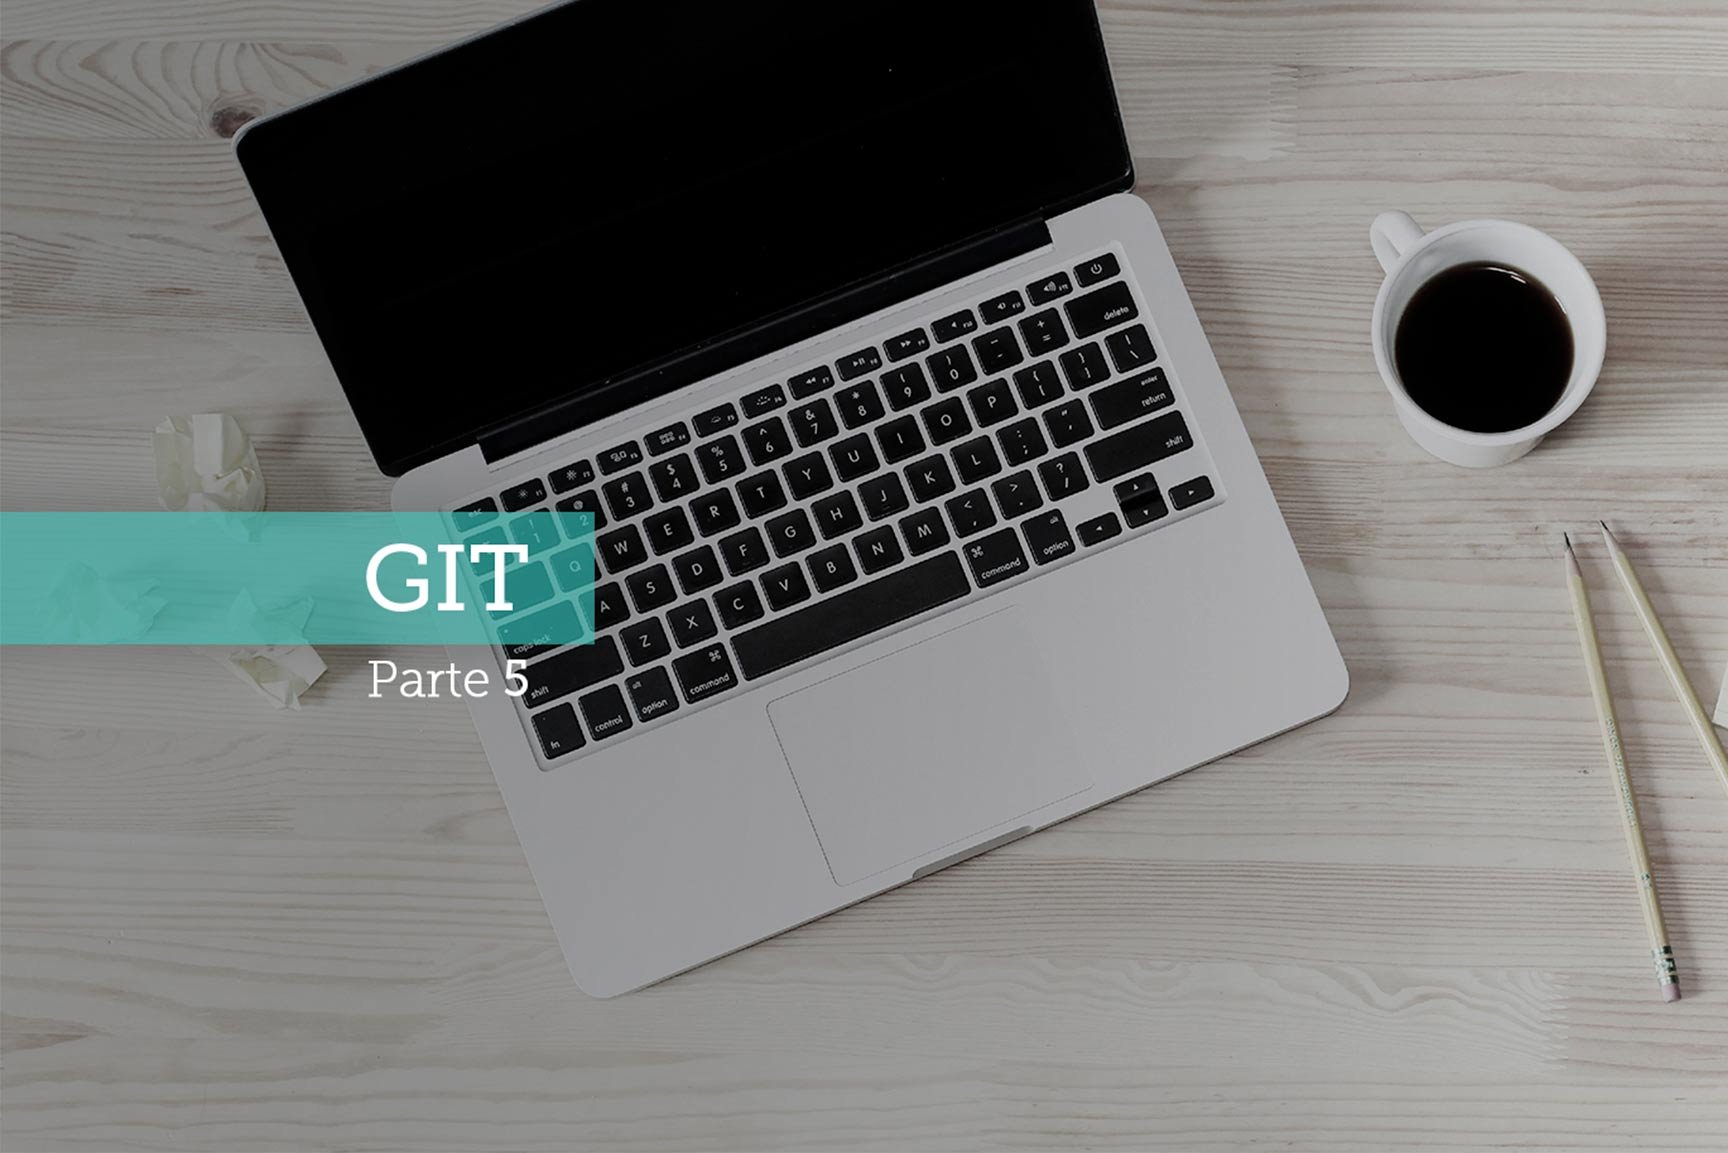 Cómo aplicar GIT Stash y Git Cherry-pick